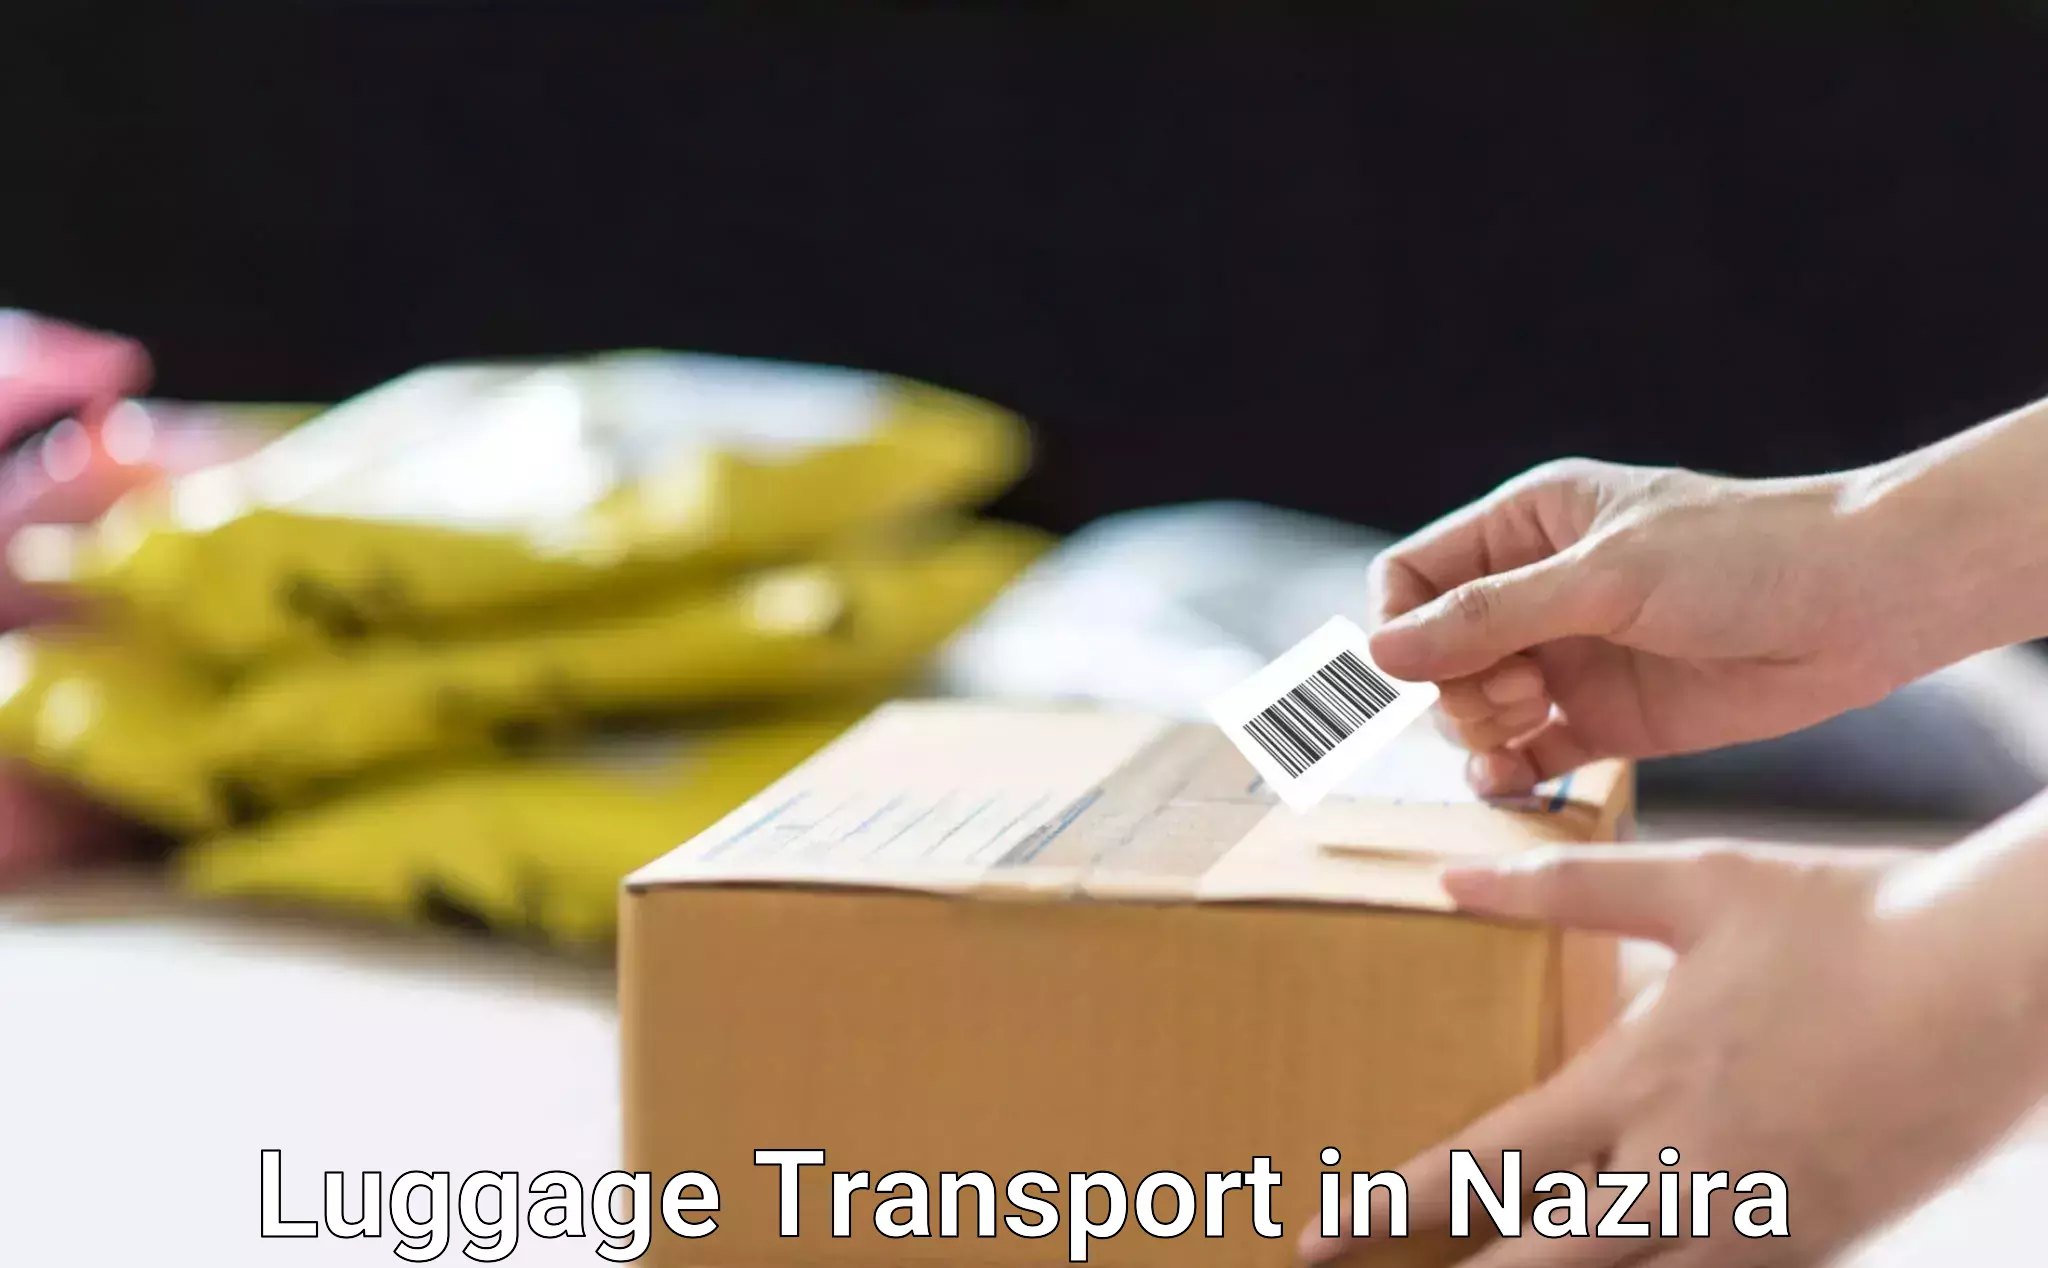 Domestic luggage transport in Nazira